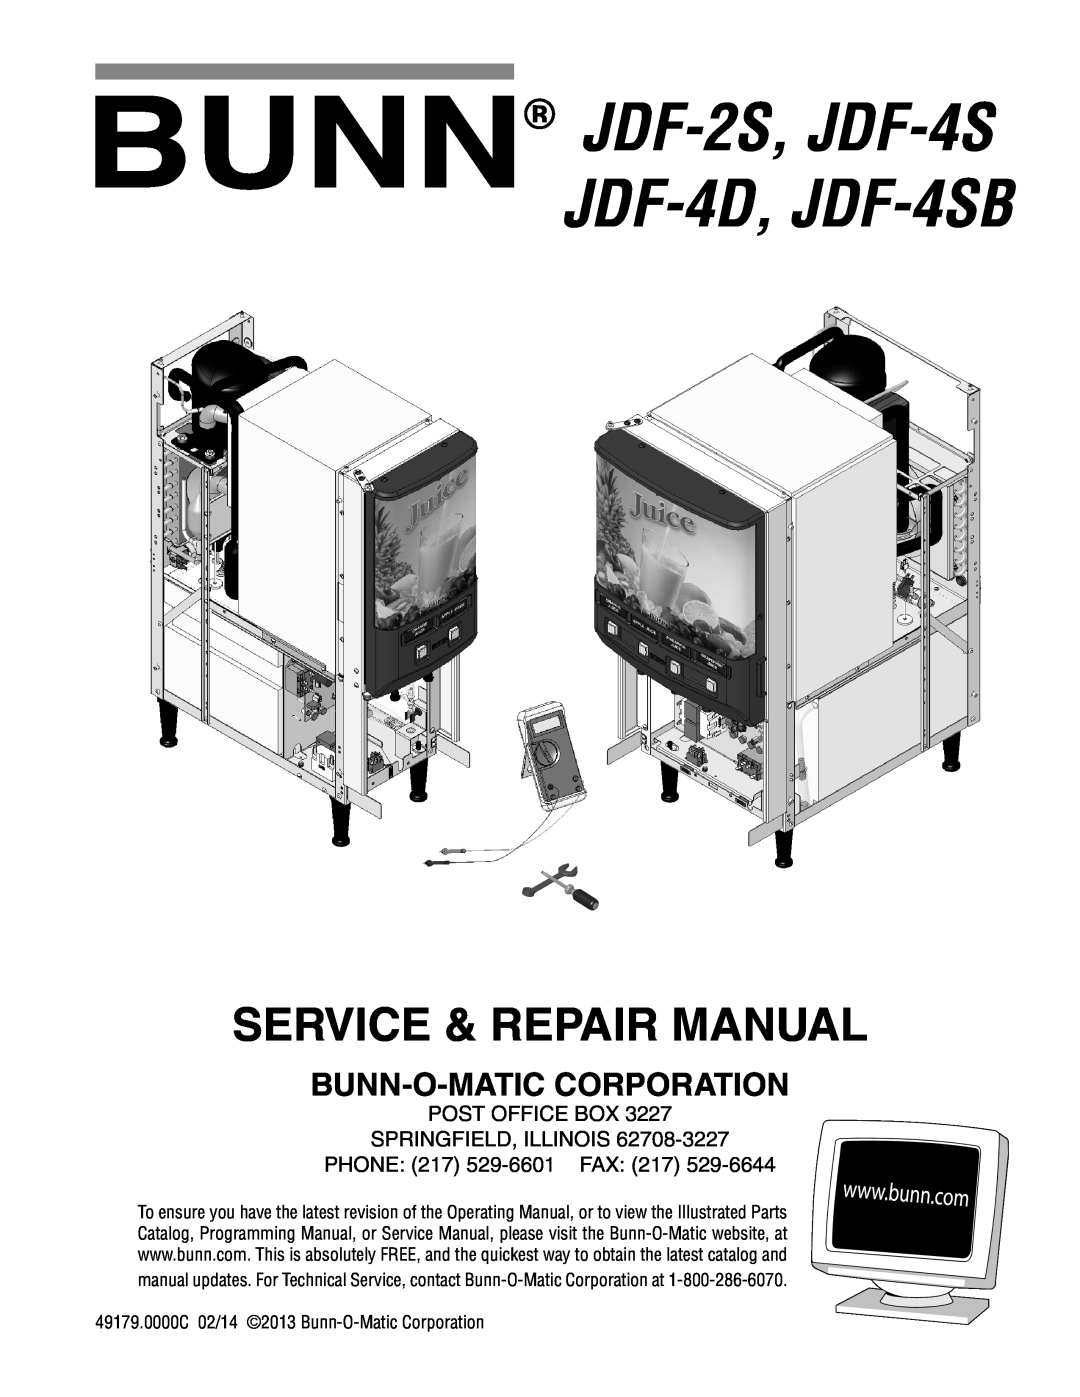 Bunn service manual Bunn-O-Matic Corporation, JDF-2S JDF-4S, Installation & Operating Guide, Silver Series 